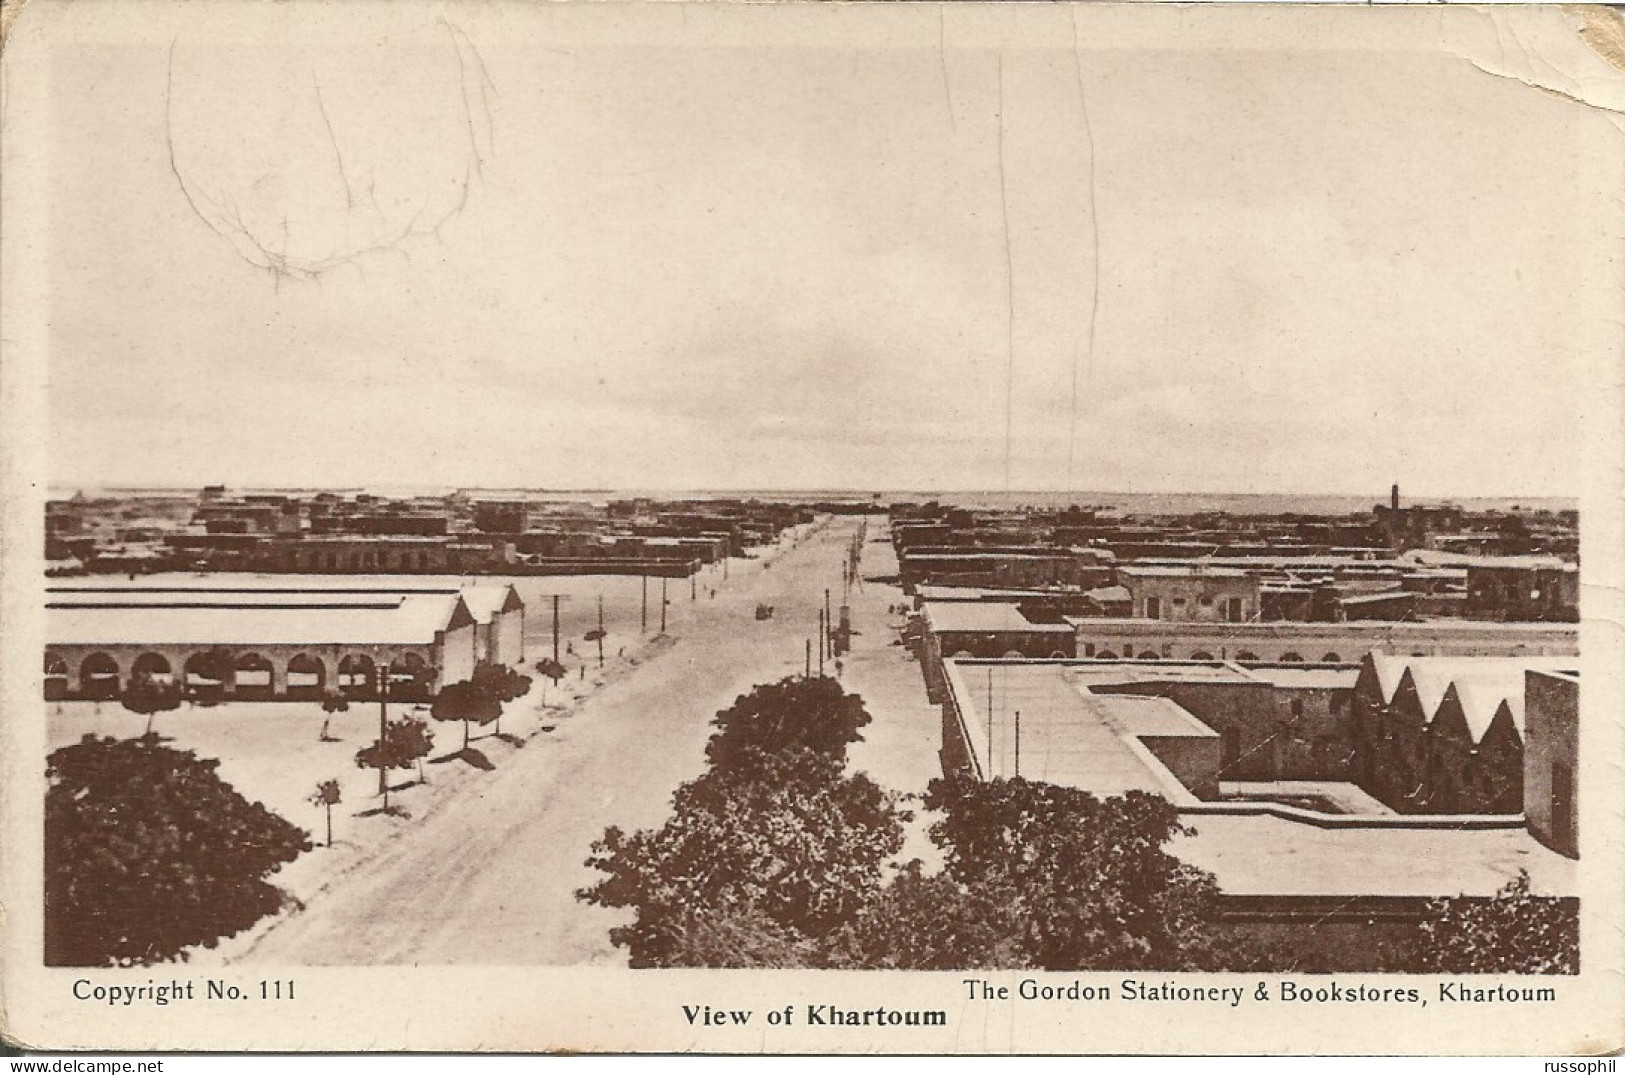 SOUDAN - SUDAN - VIEW OF KHARTOUM - PUB. THE GORDON STATIONERY AND BOOKSTORE N° 111 - 1927 - Soudan